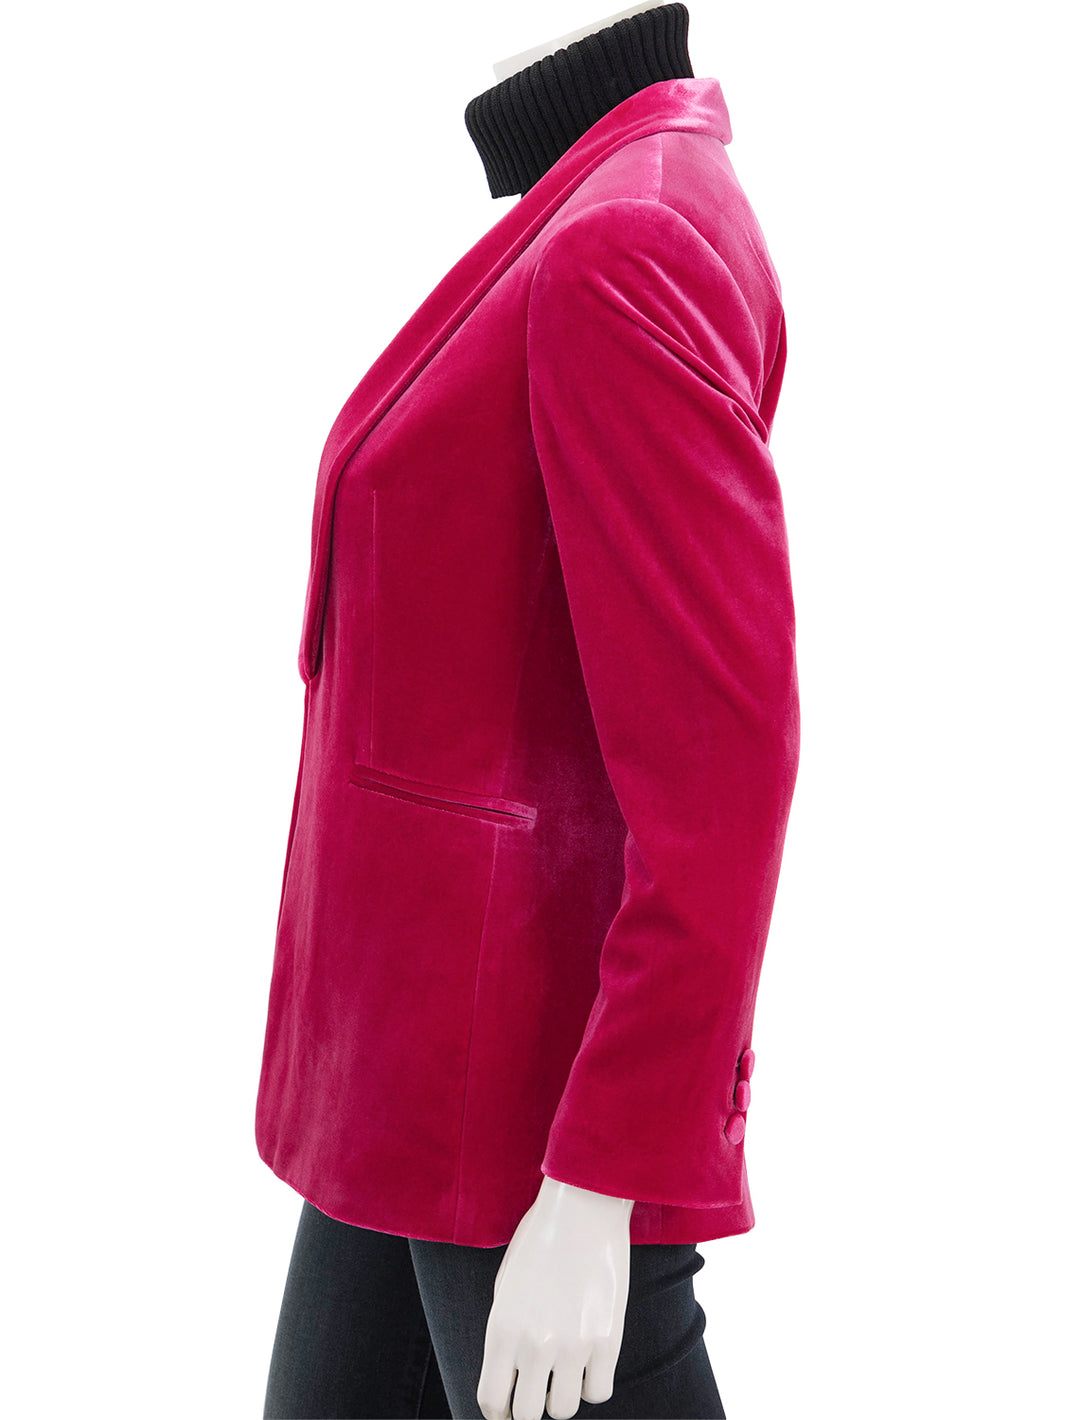 Side view of Vilagallo's pink velvet smoking jacket